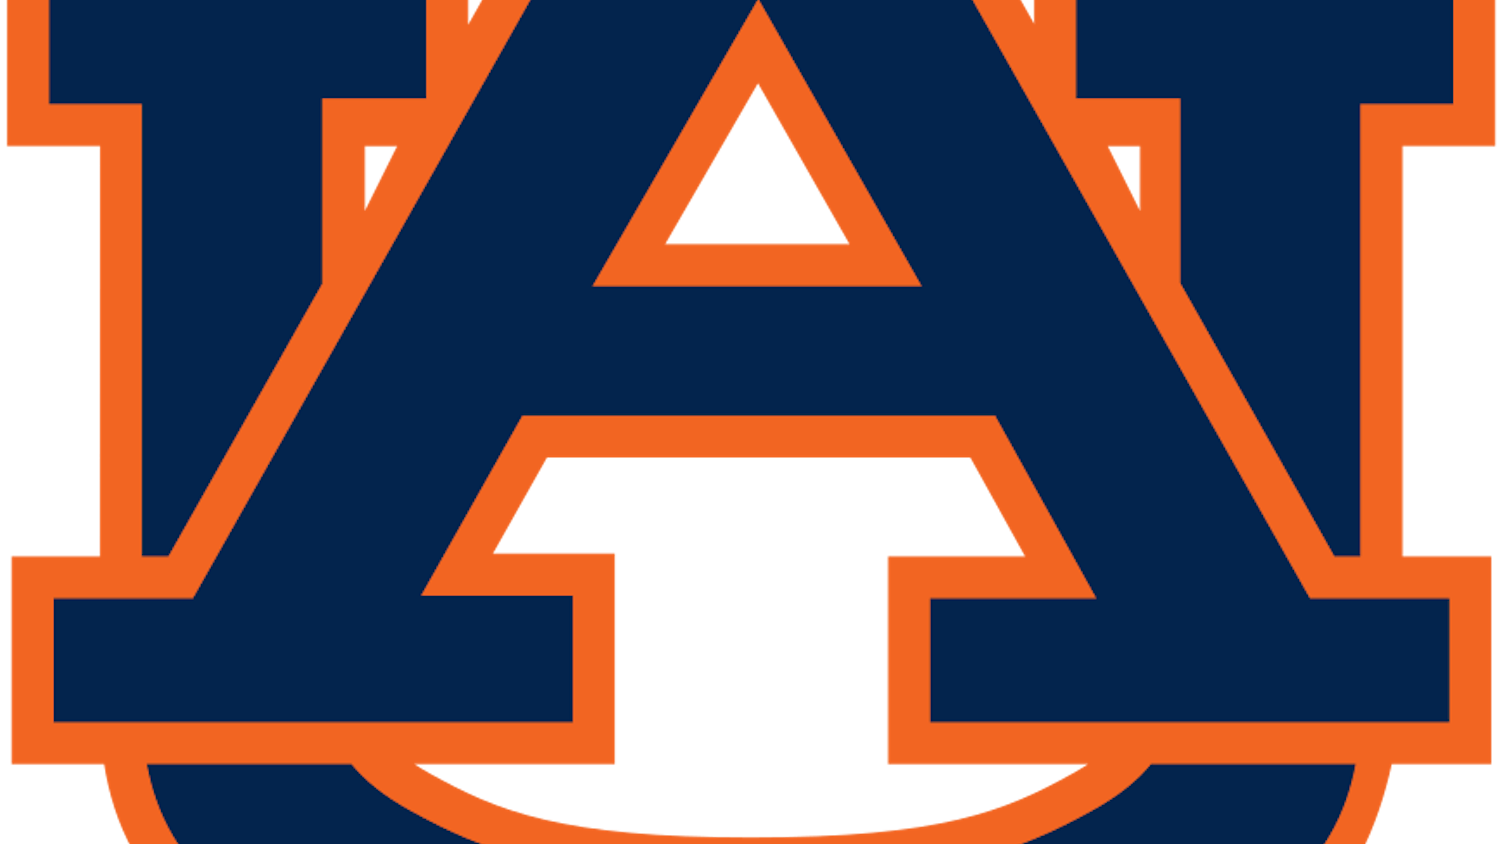 869px-Auburn_Tigers_logo.svg.png